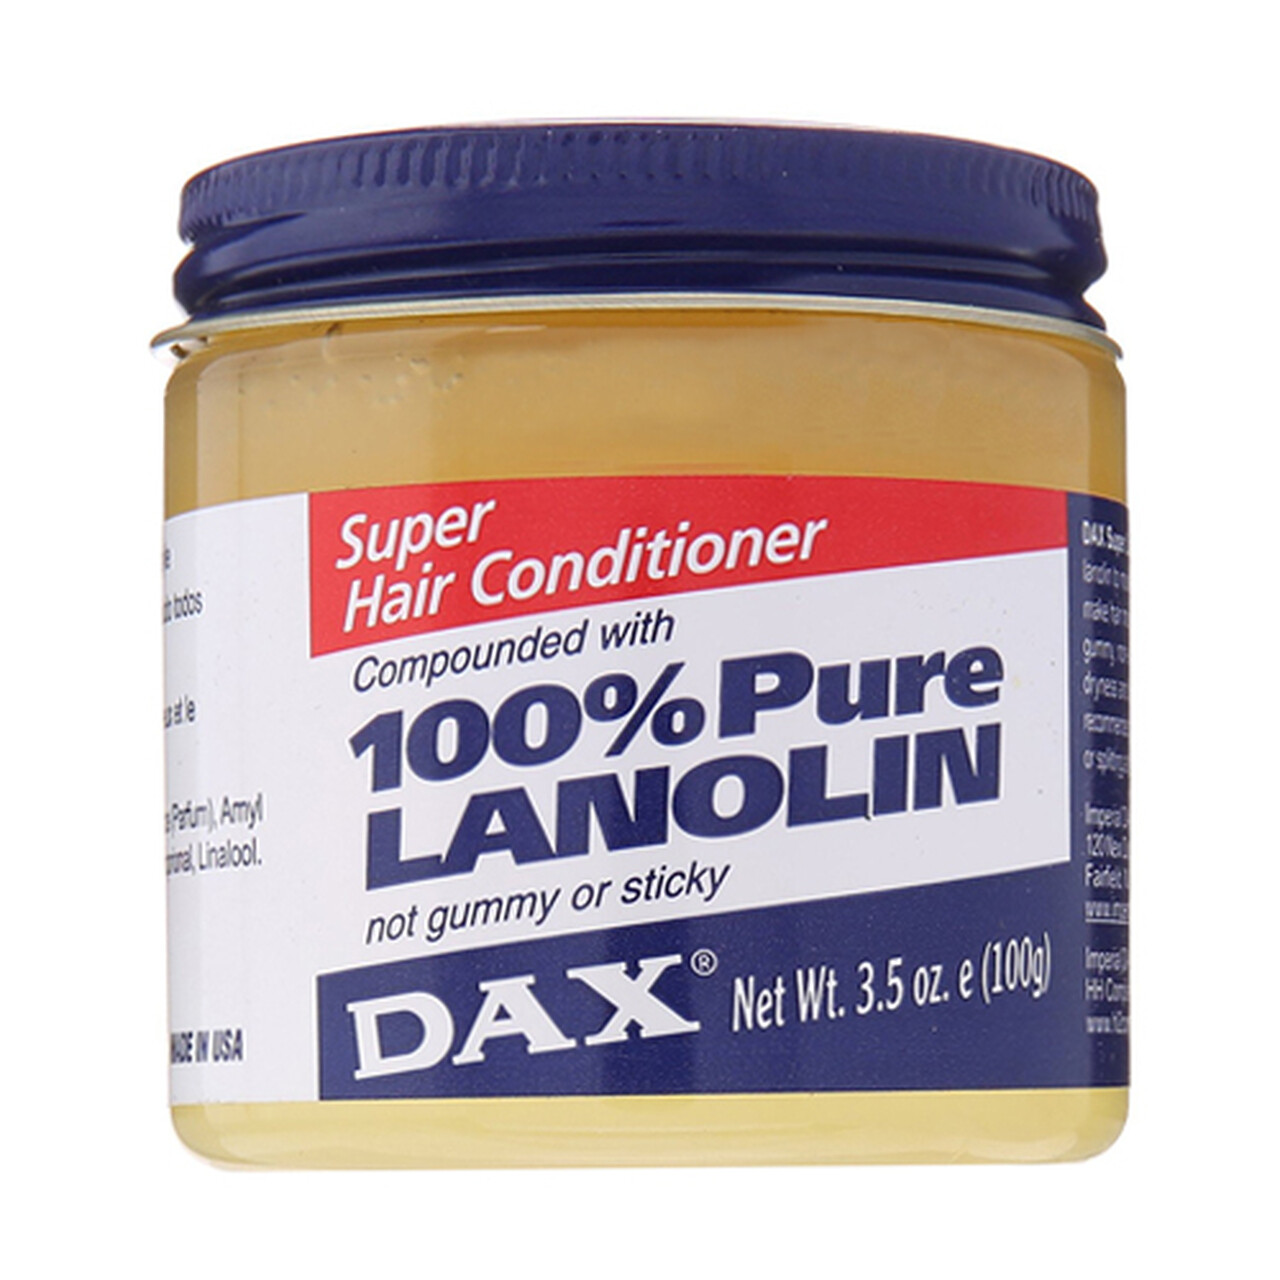 Dax 100% Pure Lanolin Super Hair Conditioner 3.5oz:| $3.99